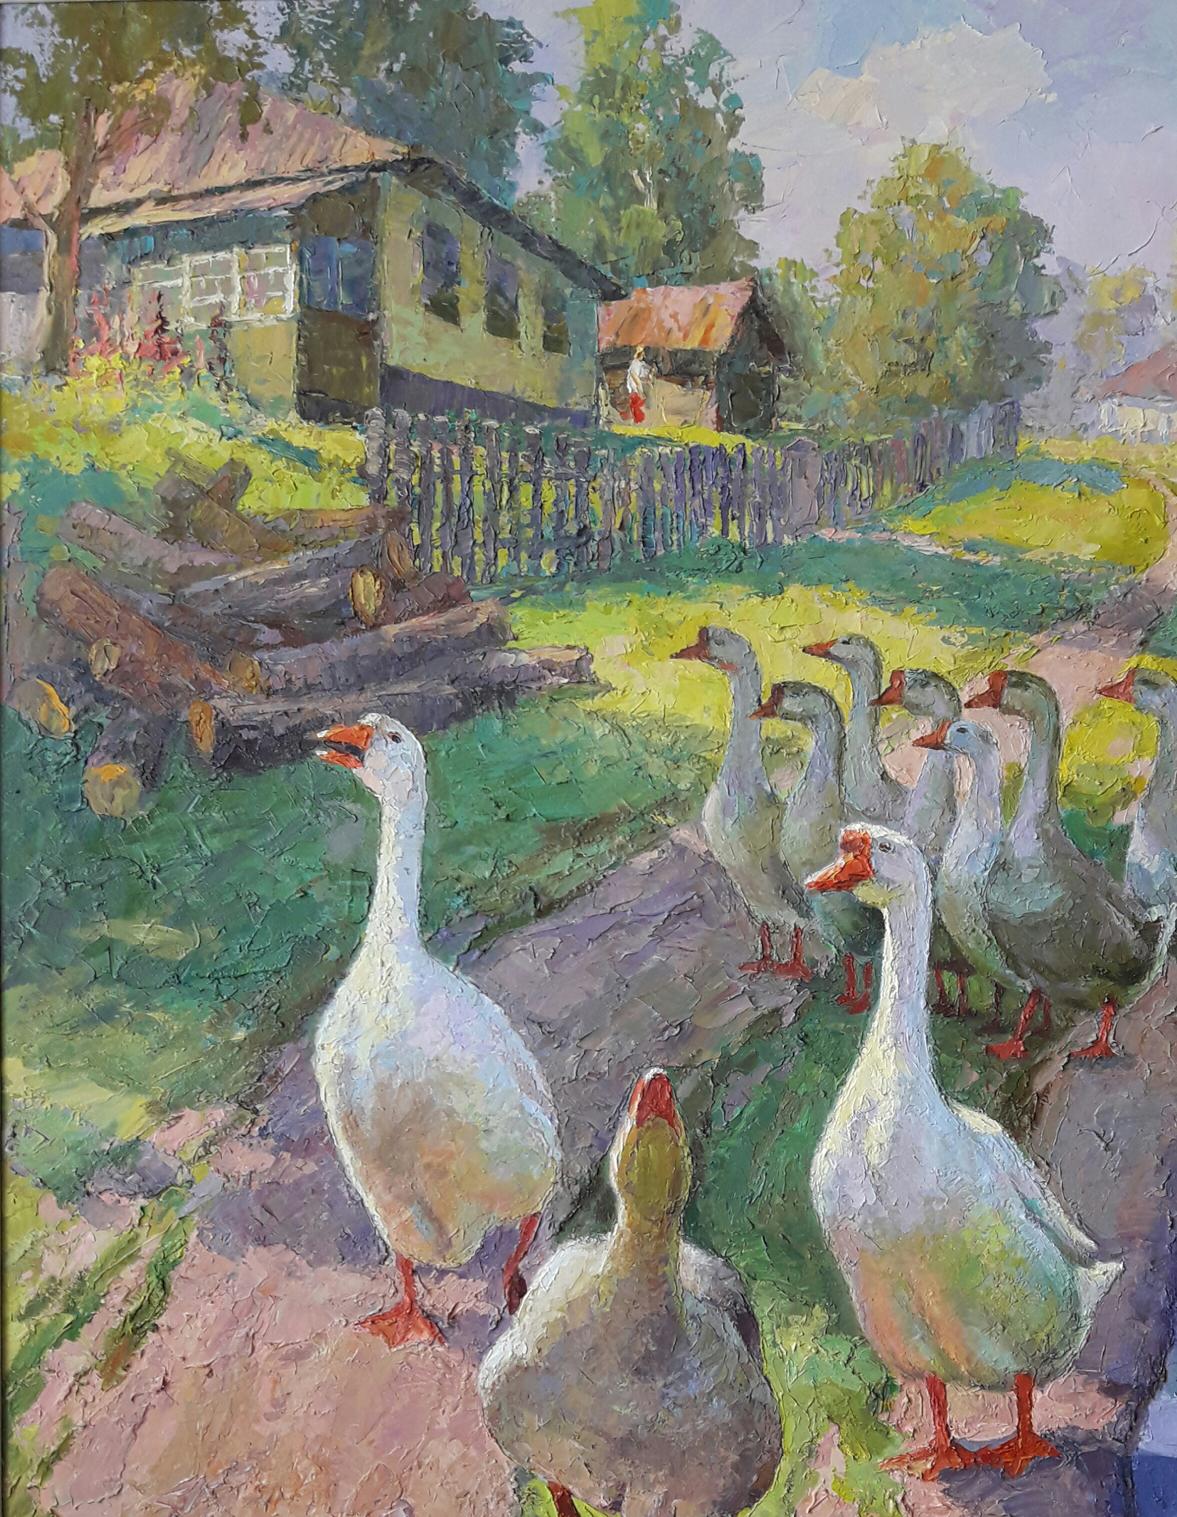 Oil painting Geese Serdyuk Boris Petrovich